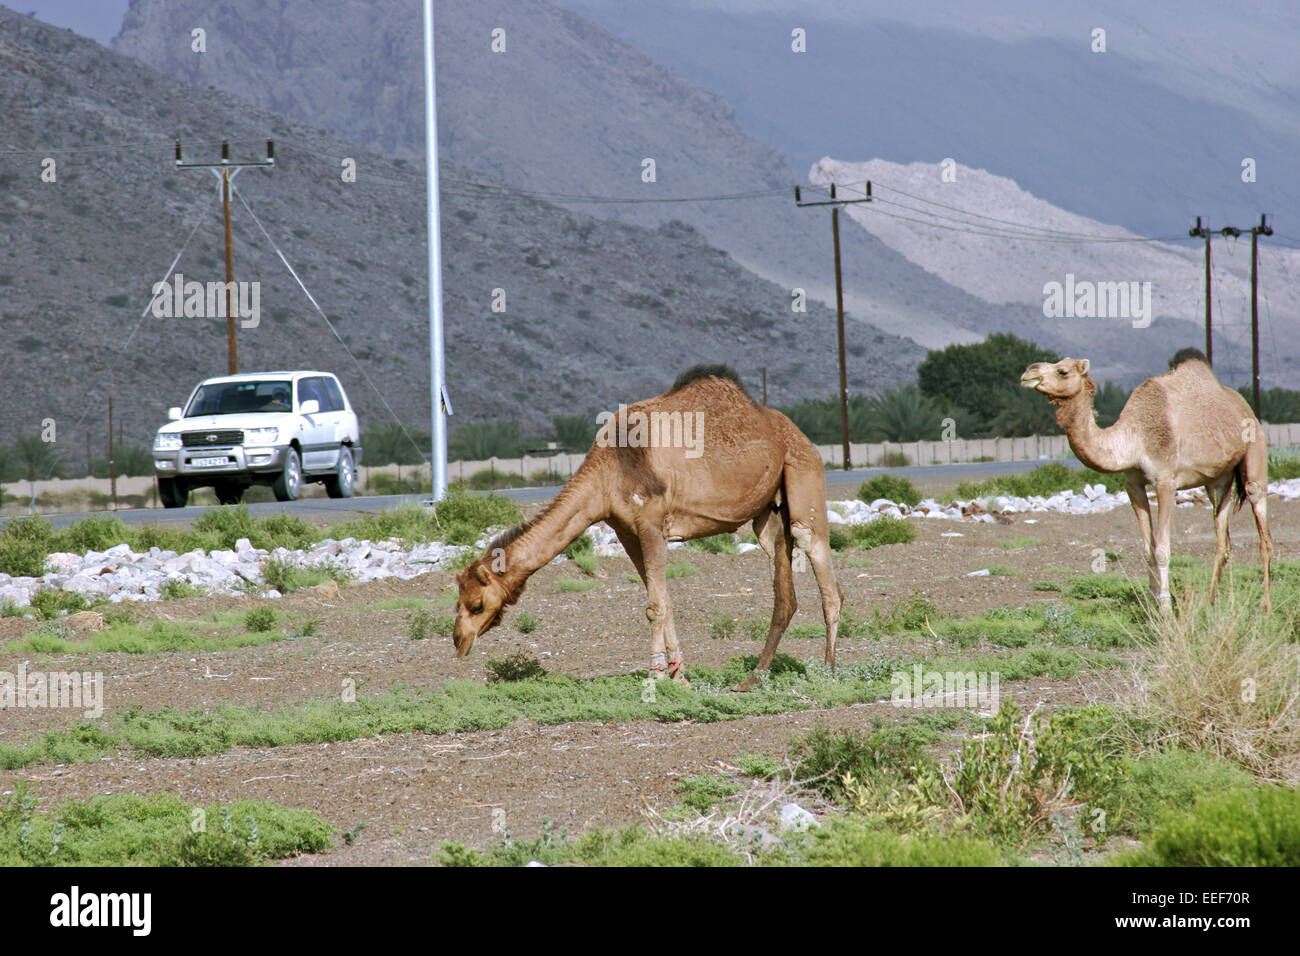 Sultanat Oman Reisen Kamel Kamele Camel Weiden Nahe Autobahn Autostrada Arabische Halbinsel Naher Osten Sultanat Tourismus Geograph Foto Stock